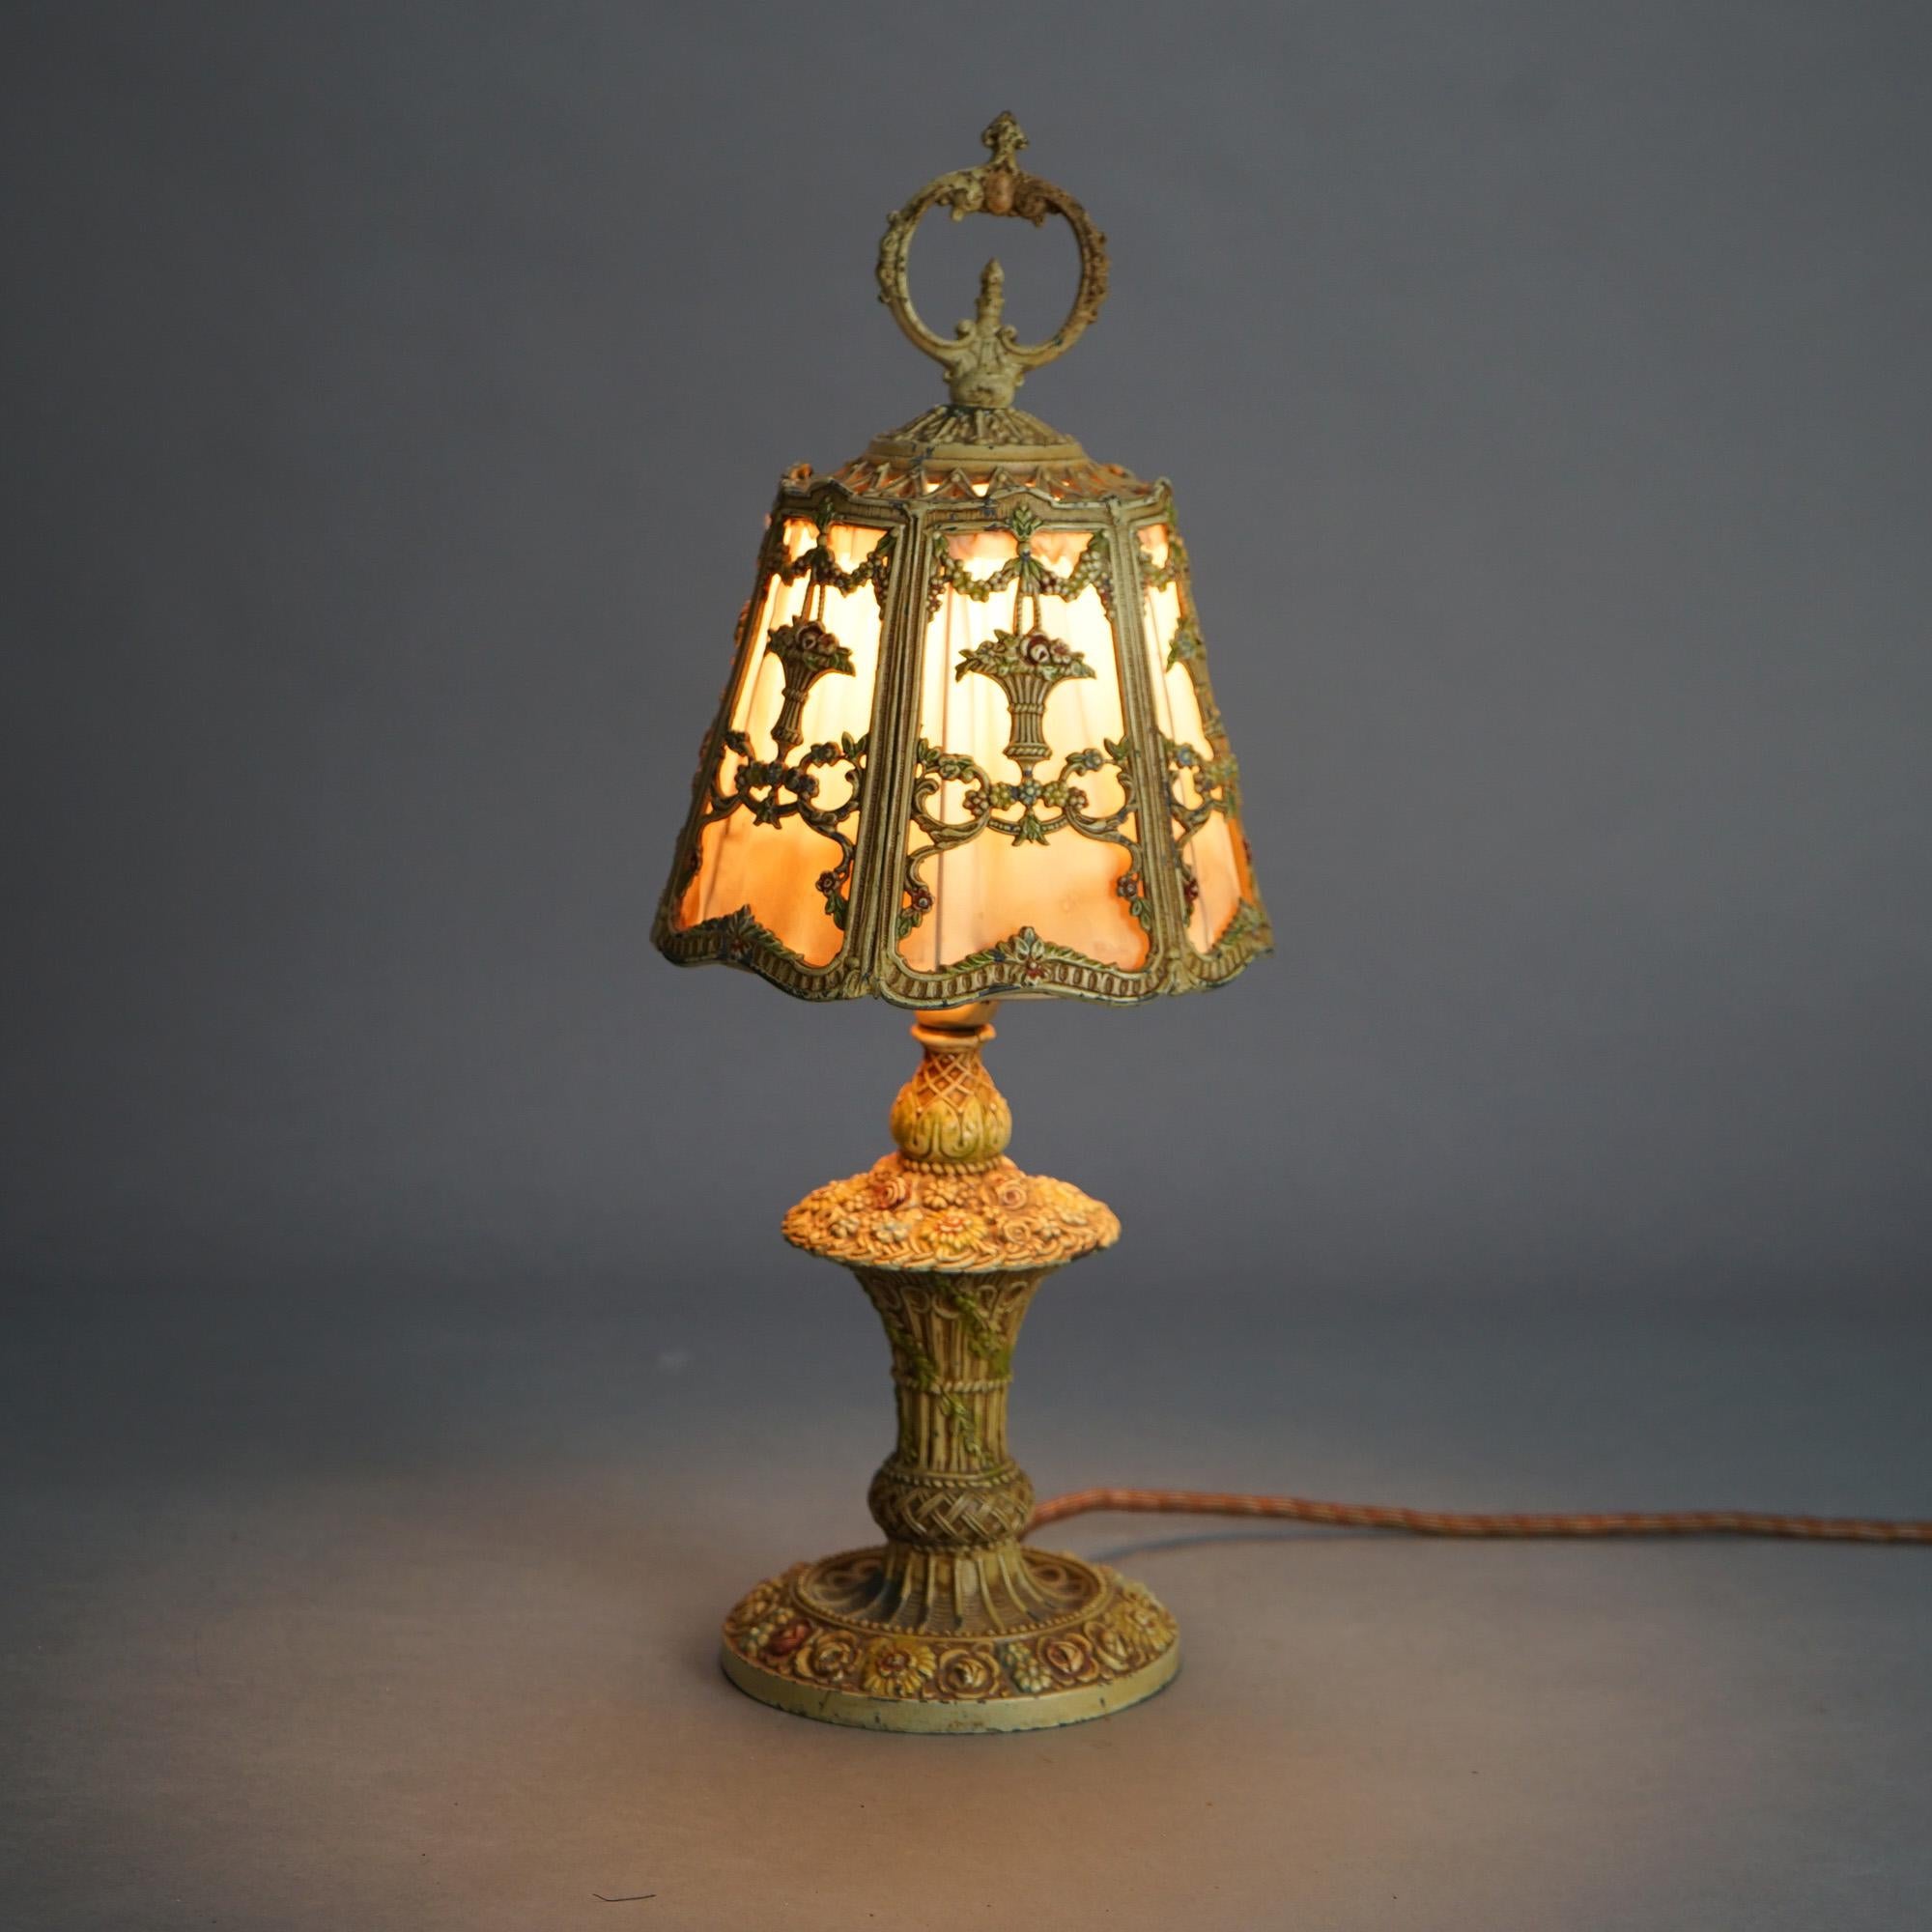 Antique Polychromed Panier de Fleurs Table Lamp in the Manner of Bradley & Hubbard c1920

Measures - 18.5